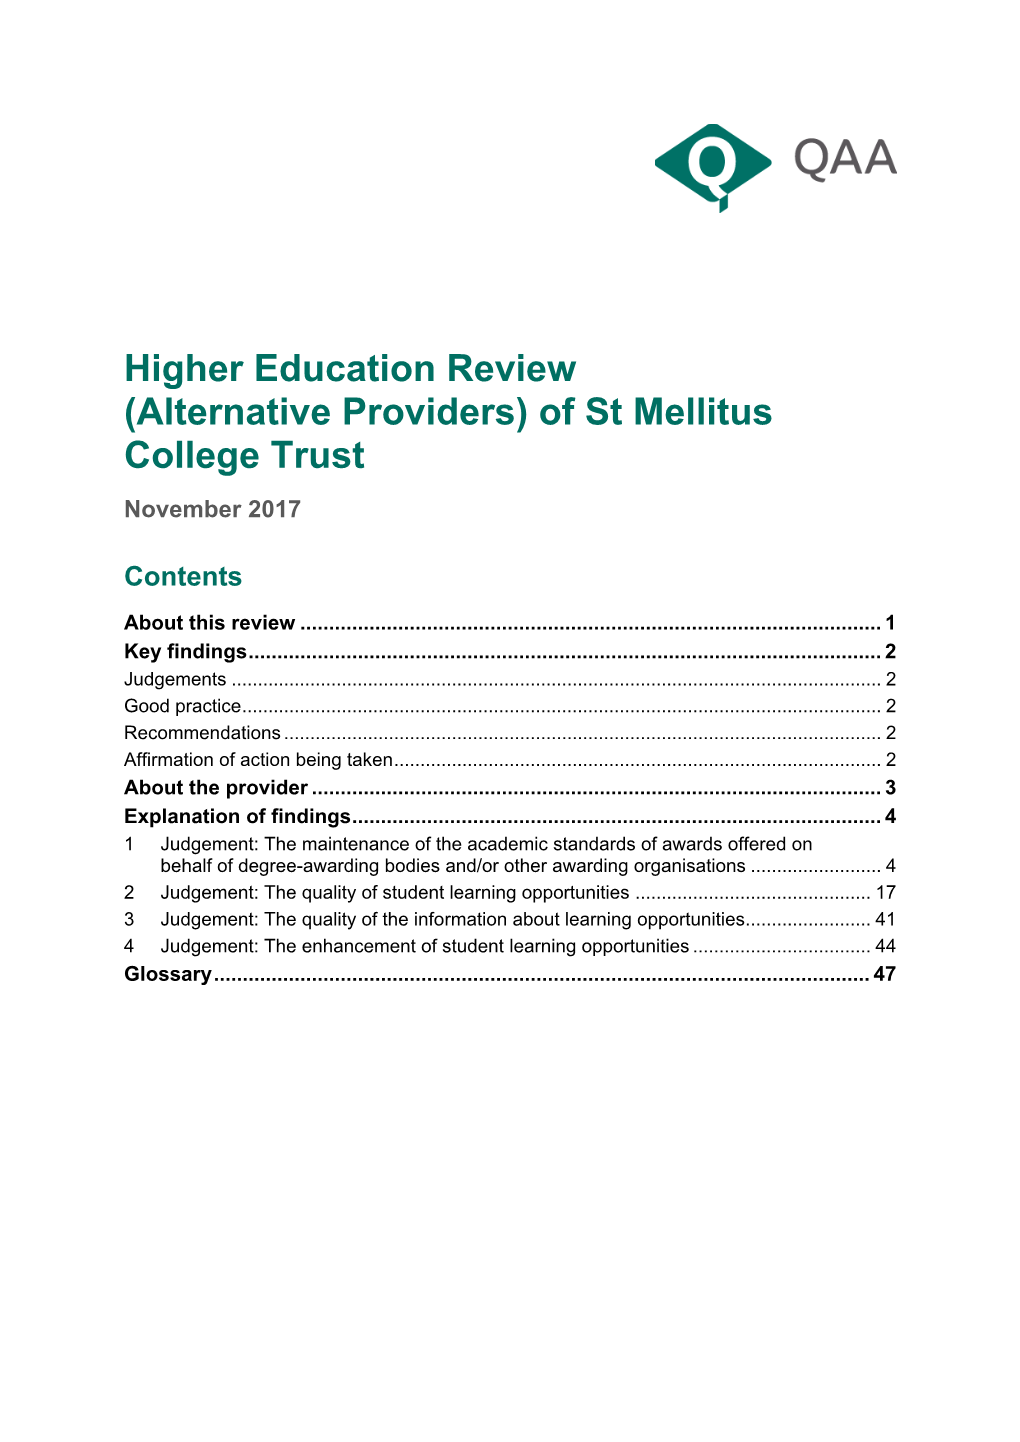 Higher Education Review (Alternative Providers): St Mellitus College Trust, November 2017